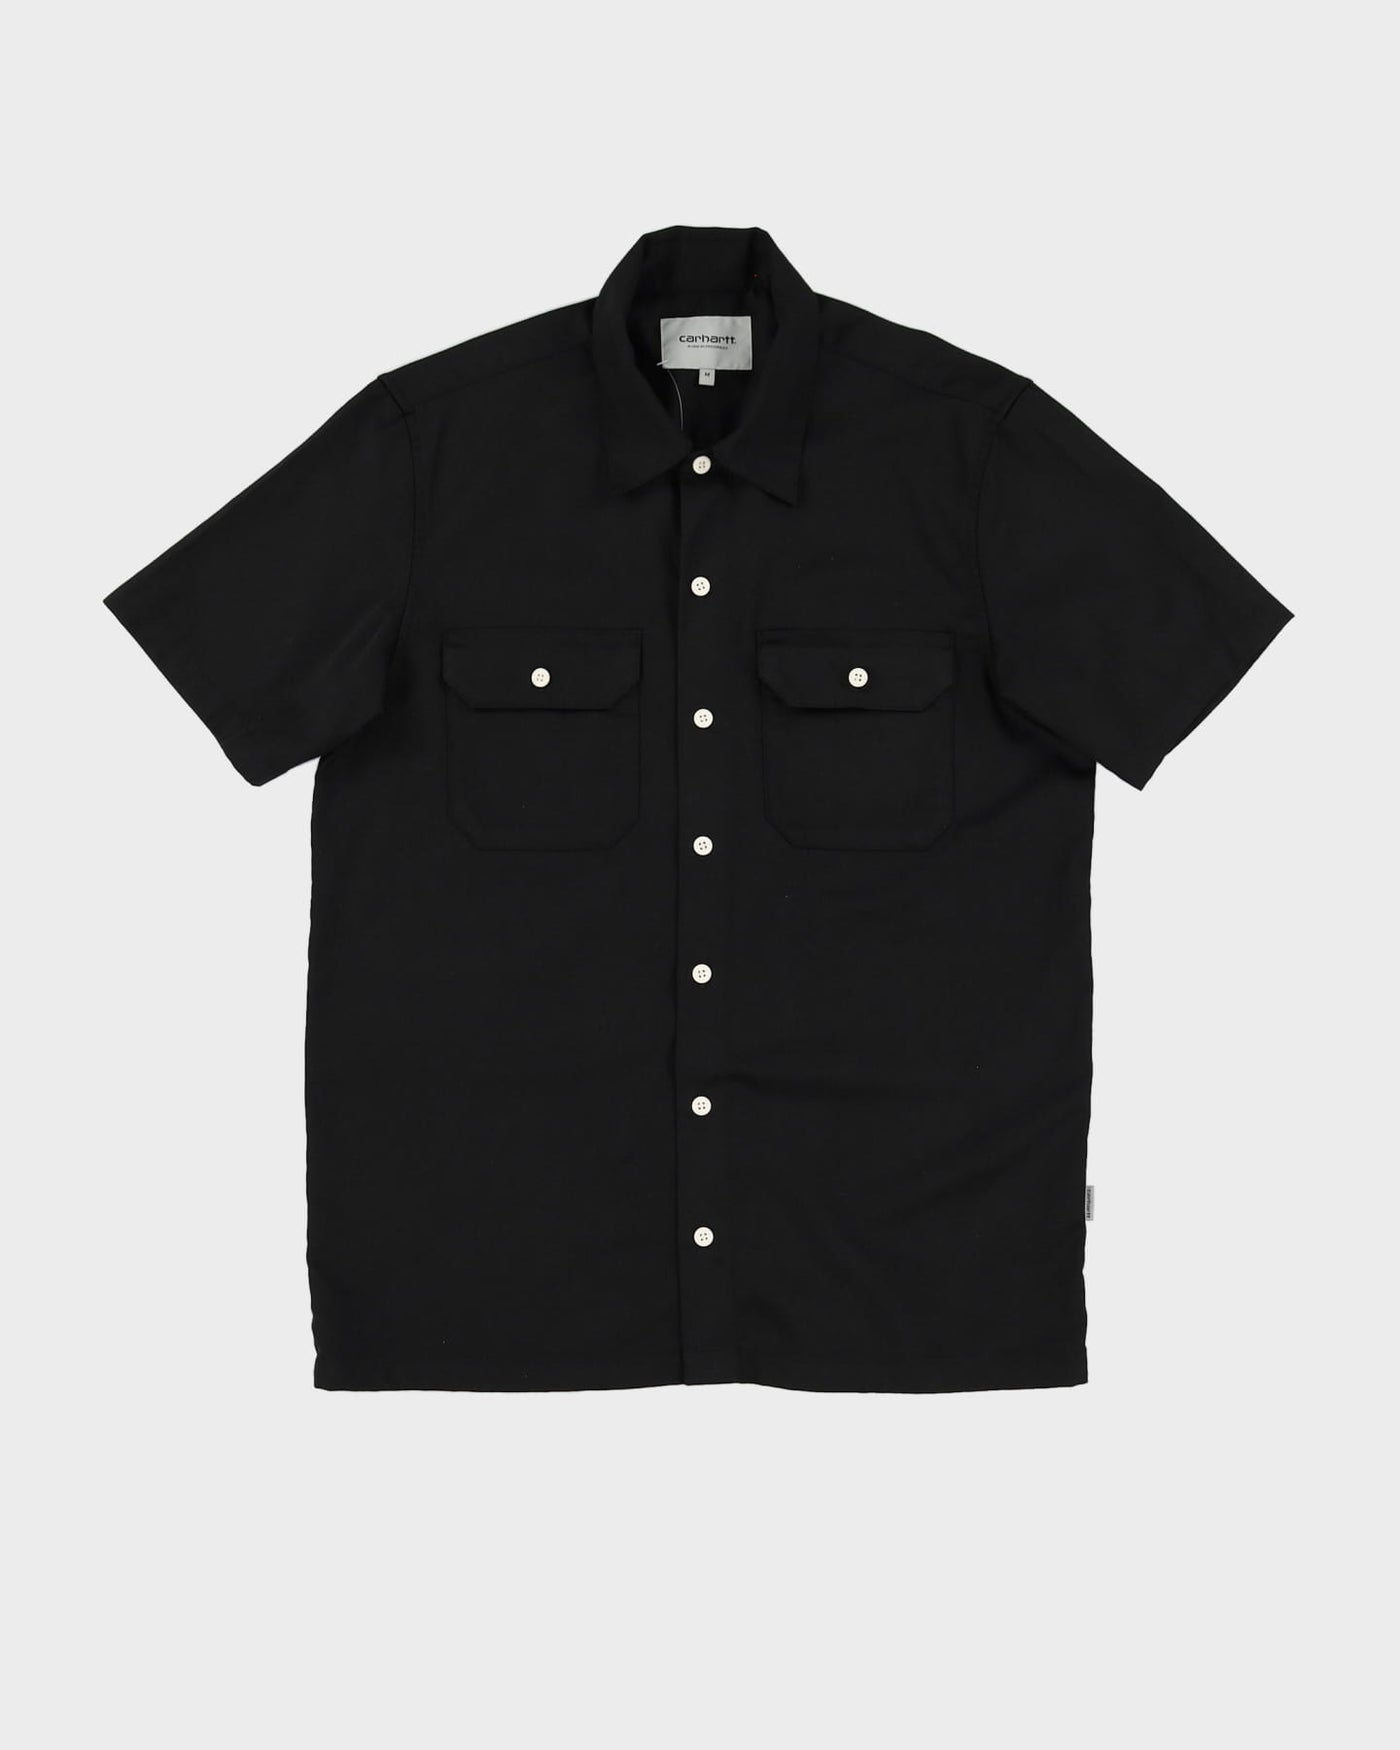 00s Carhartt Black Work Shirt - M